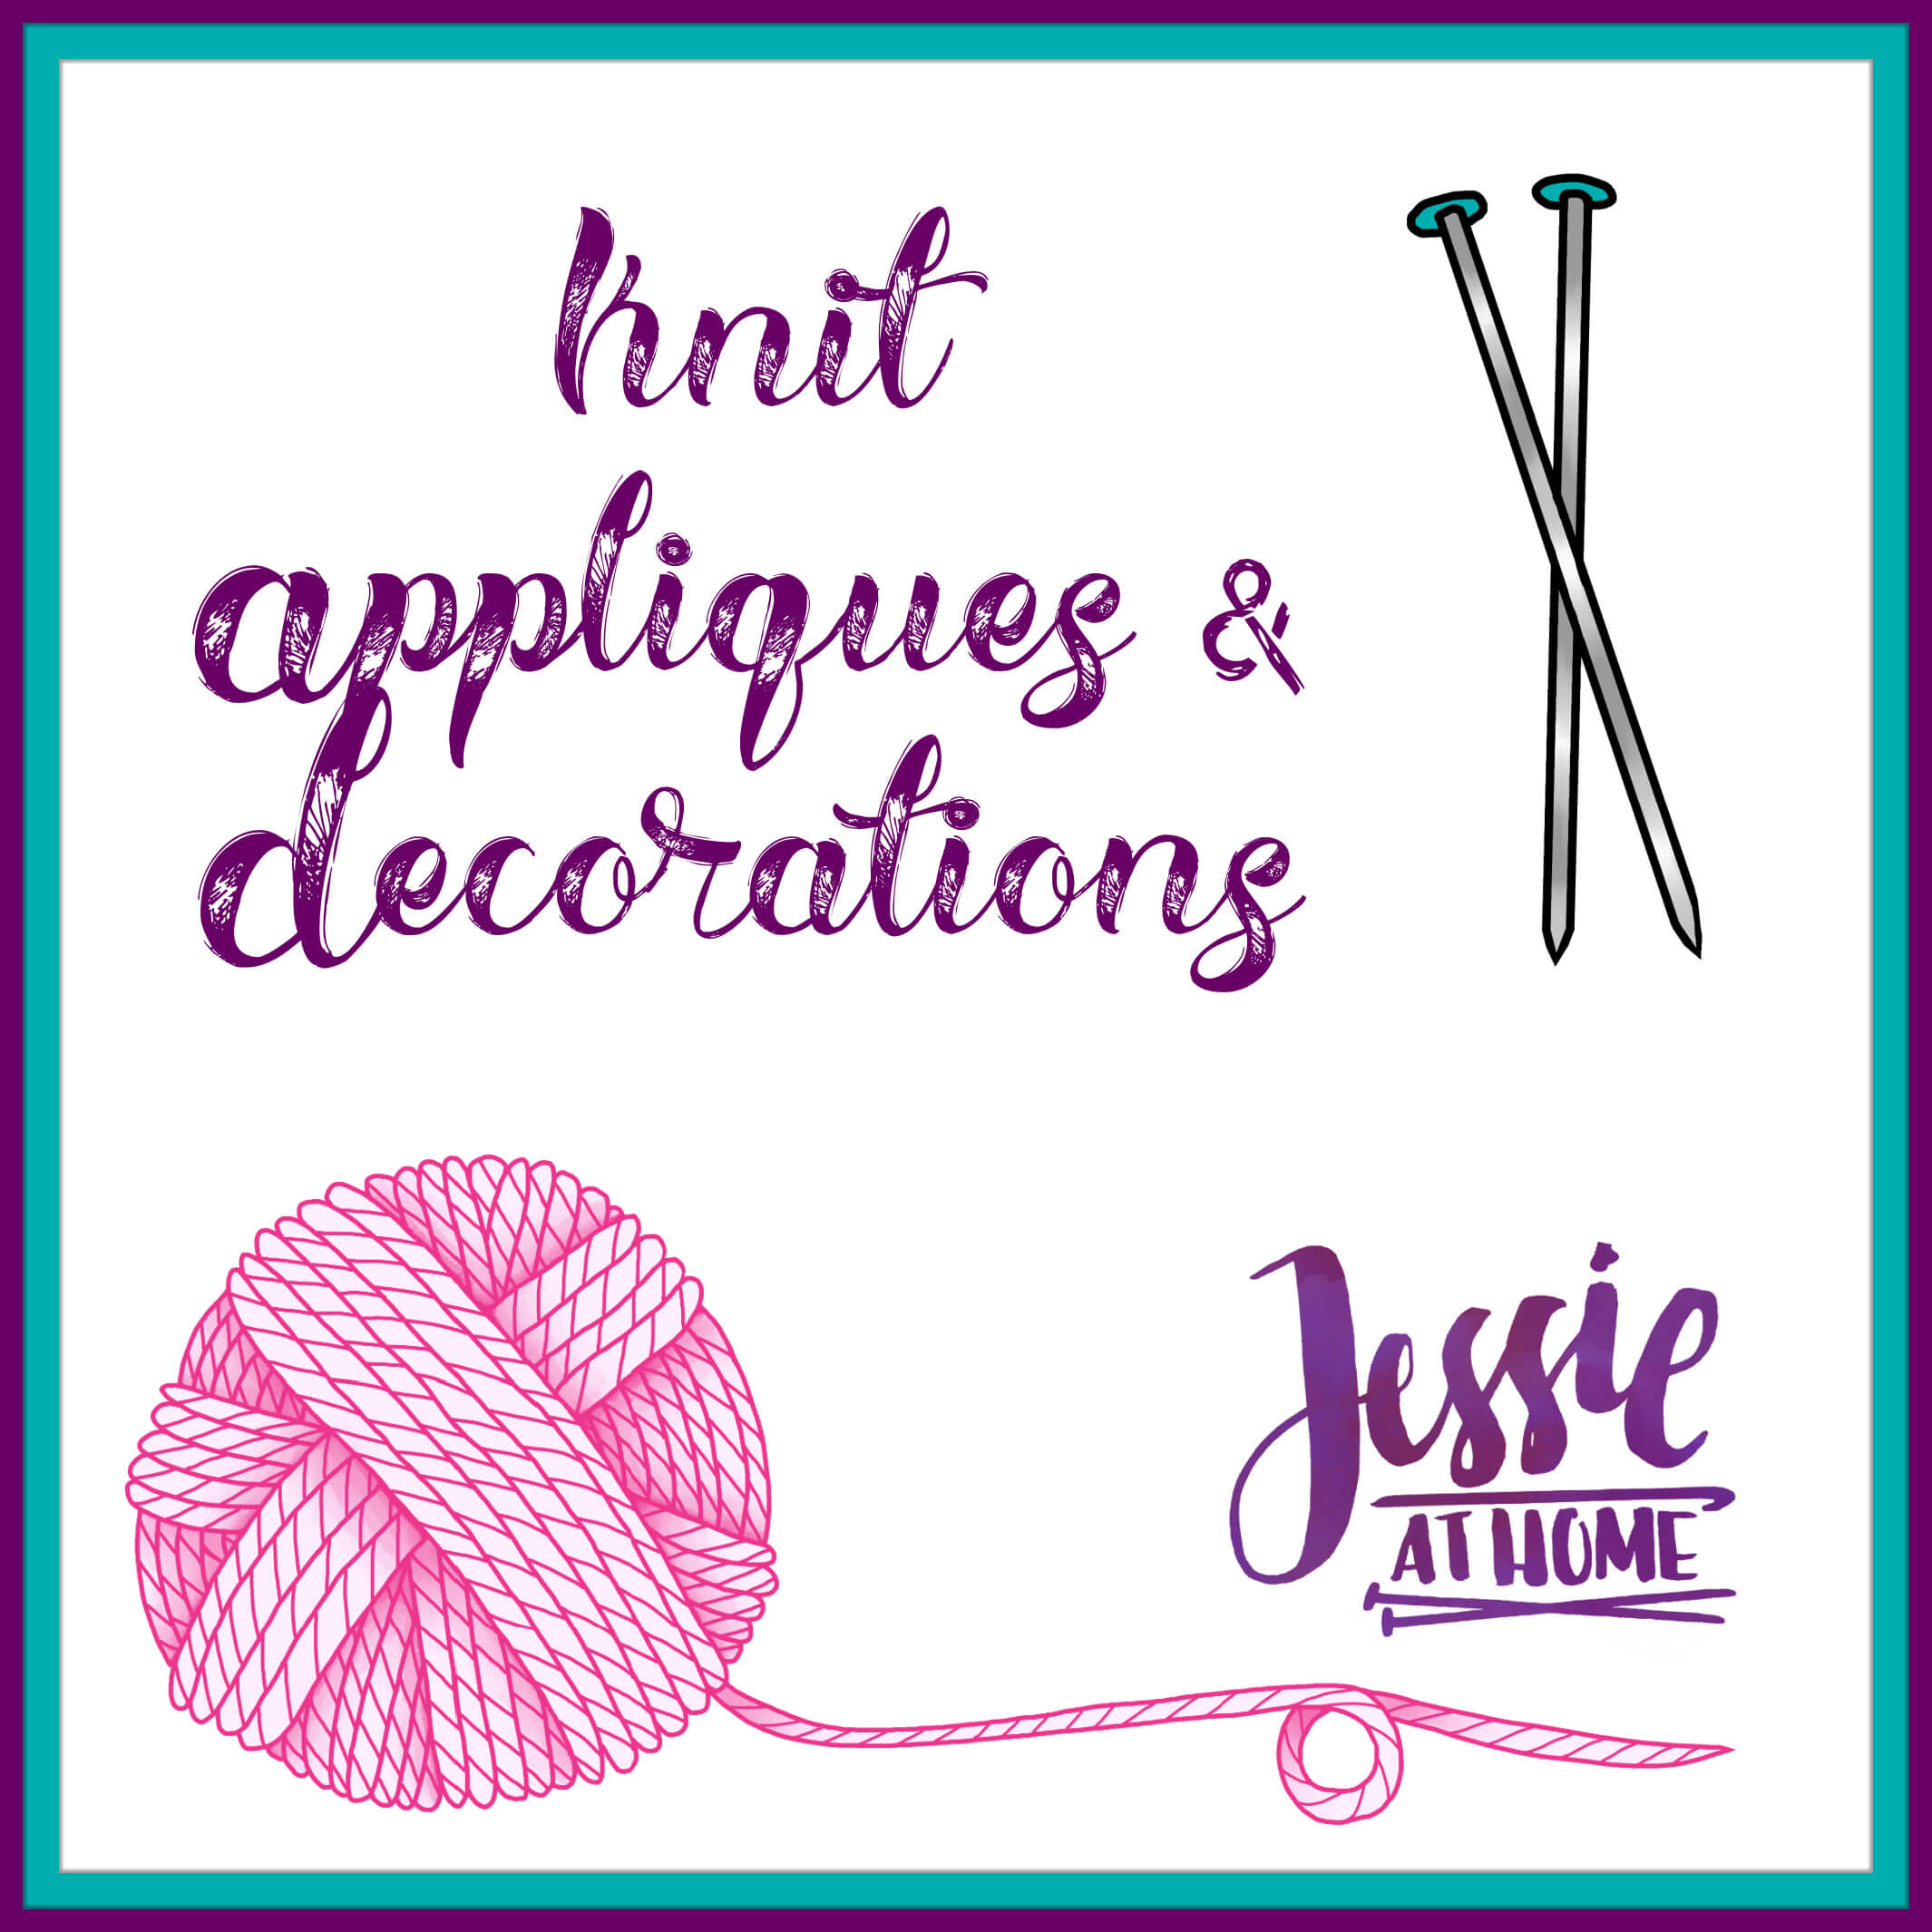 Knit Appliques & Decorations Menu on Jessie At Home